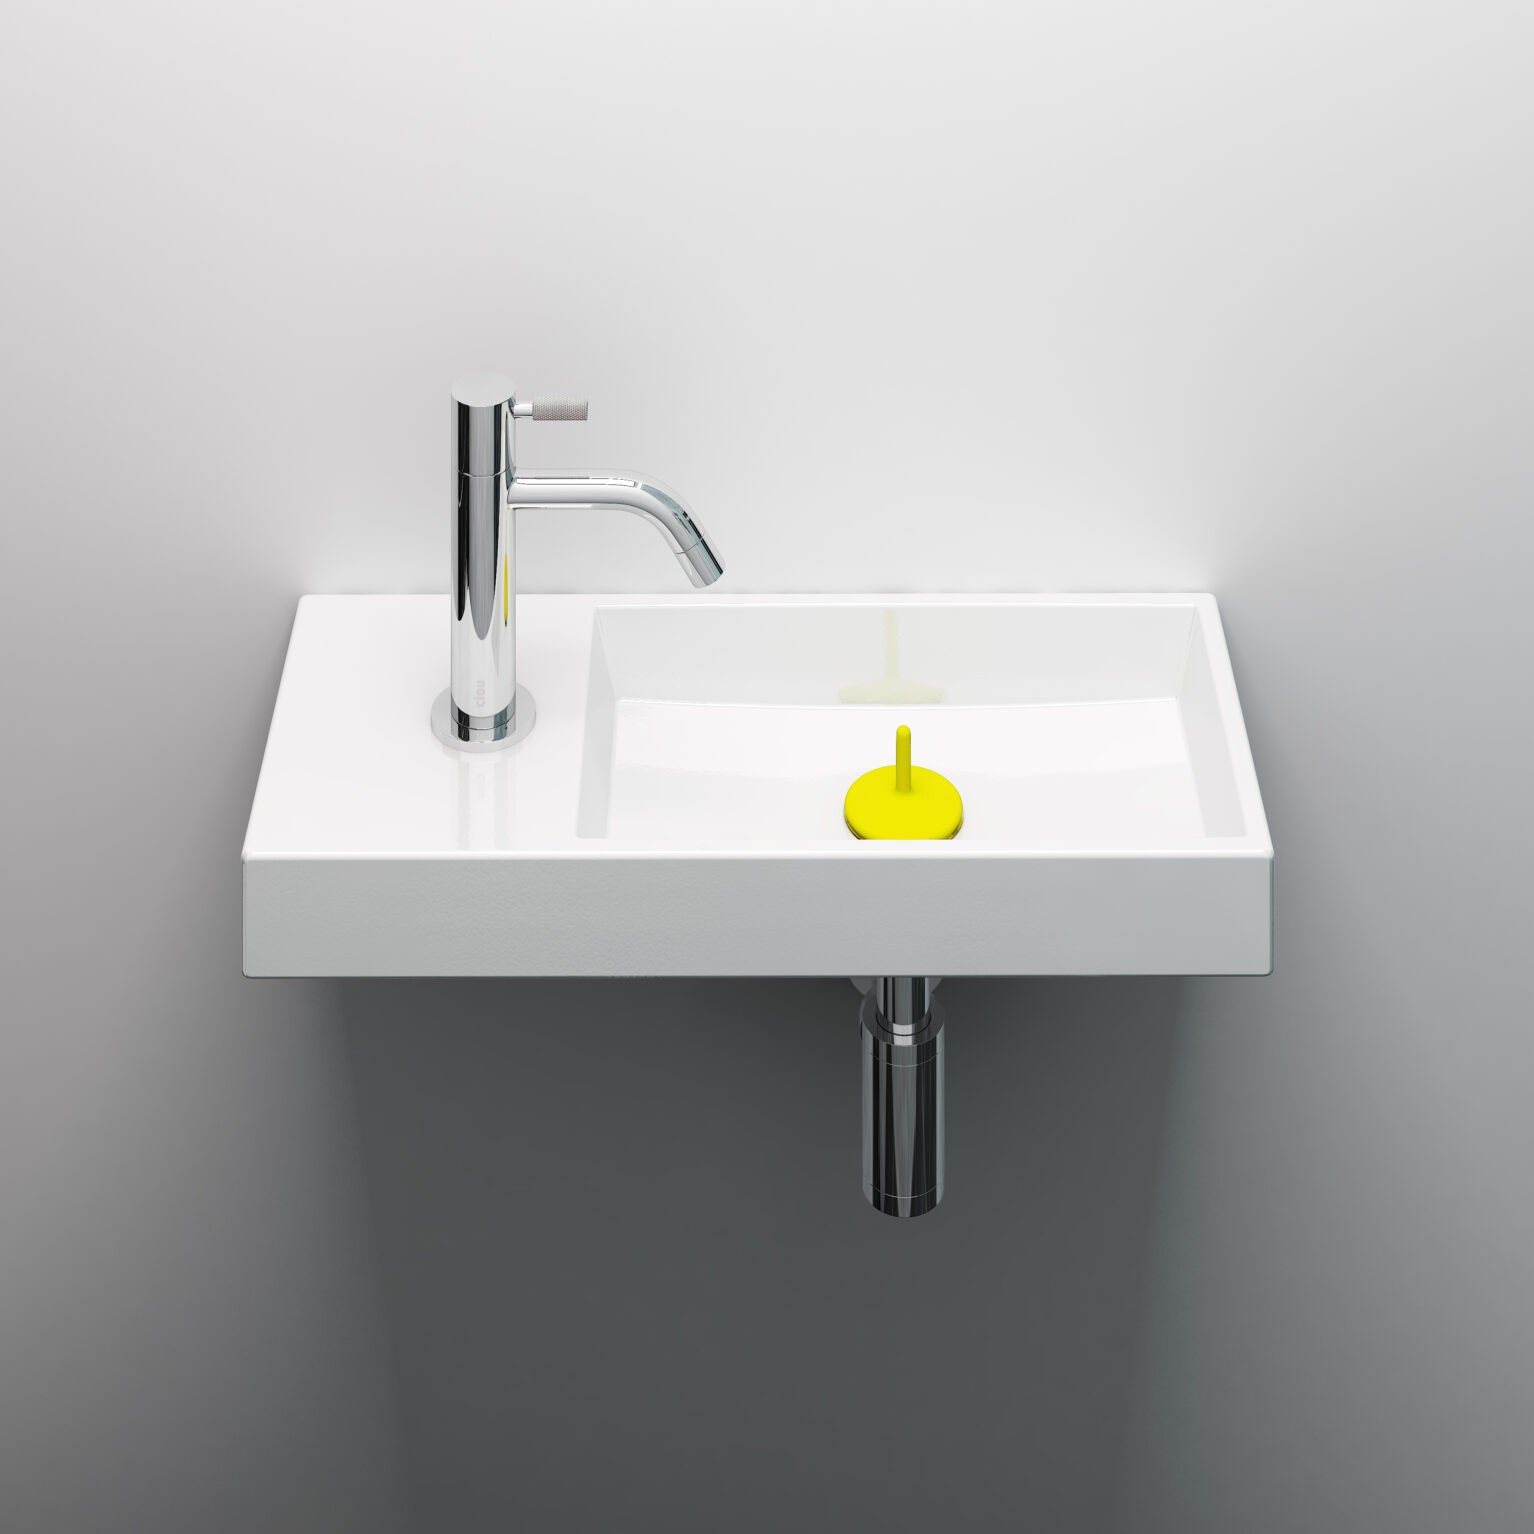 Wash-Me-fontein-siliconen-waterstop-geel-sifon-koudwaterkraan-Freddo-badkamer-luxe-sanitair-clou-CL0655024